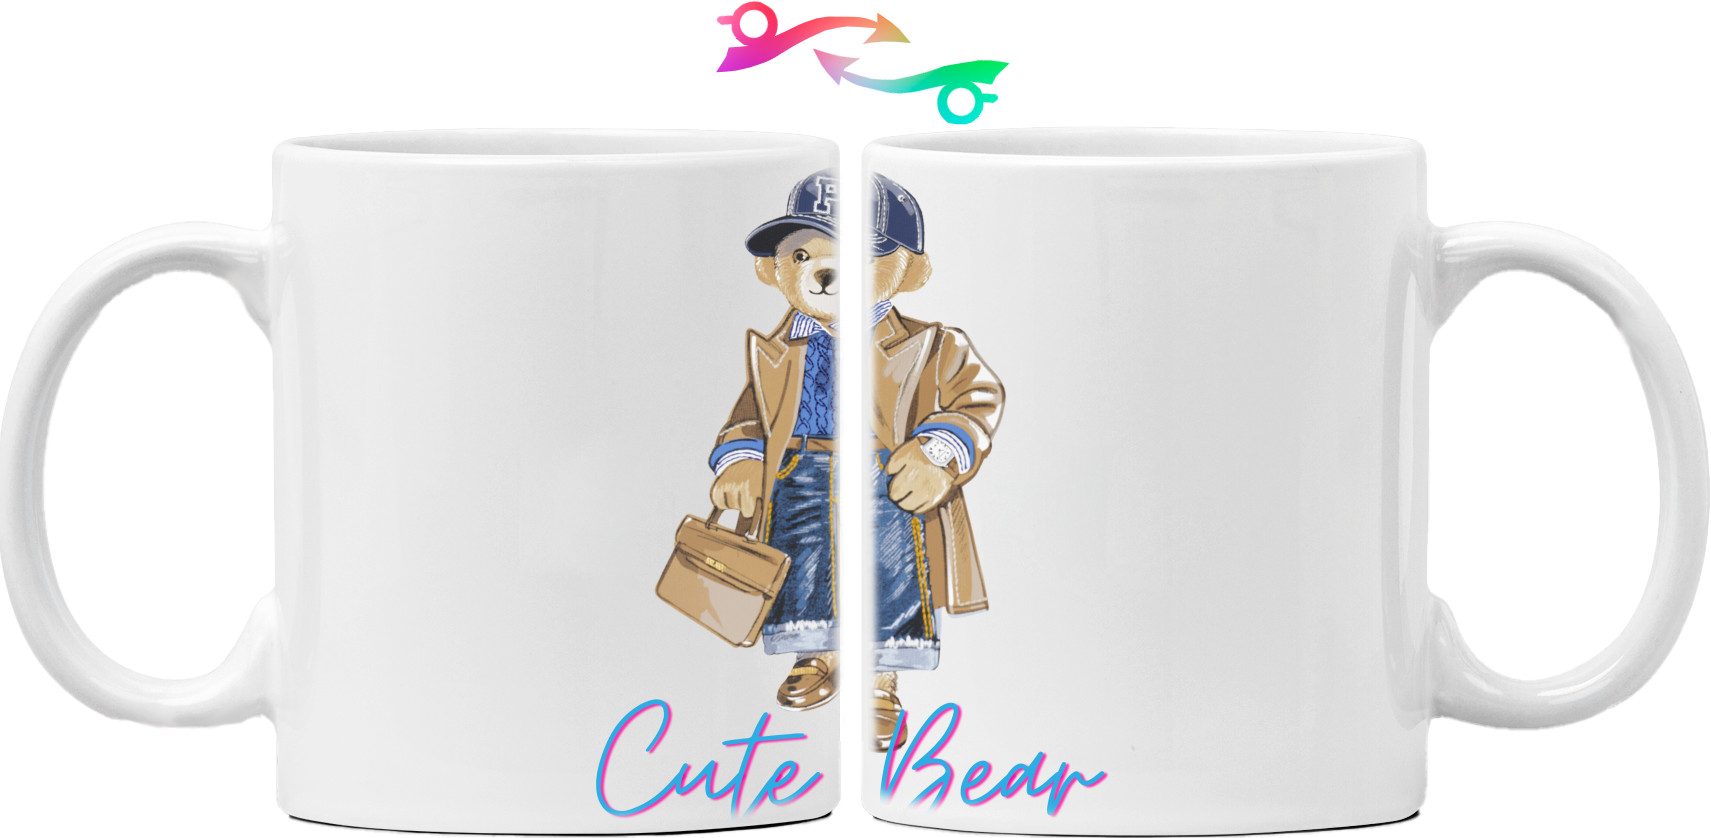 Cute Bear, Teddy Bear, Стильный мишка